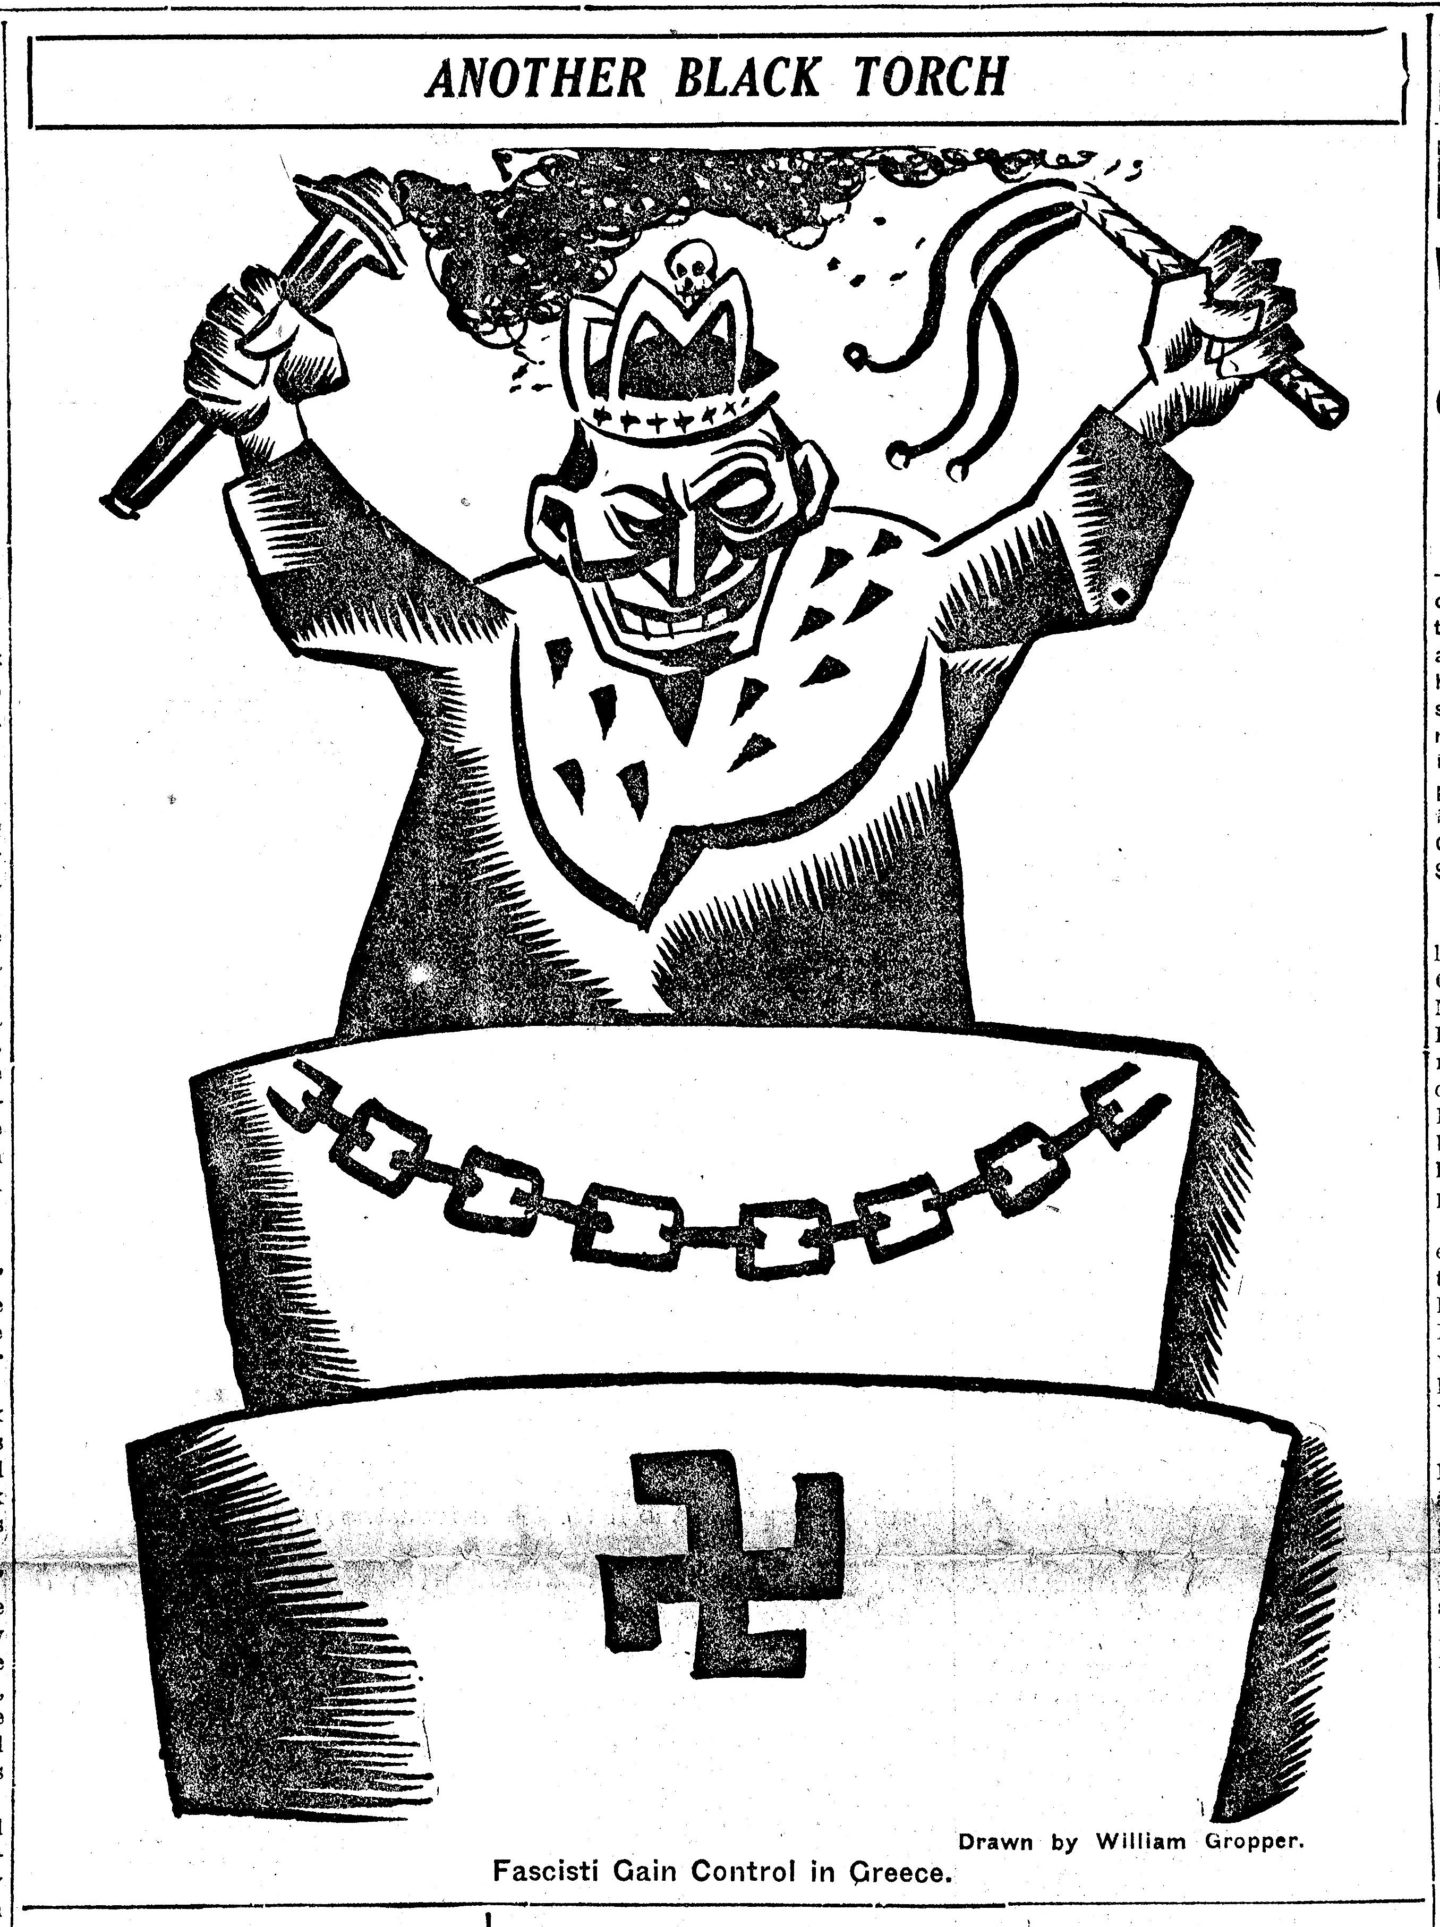 William Gropper, karykatura z pisma "Daily Worker", lata 20. XX wieku / caricature published in "Daily Worker", 1920's